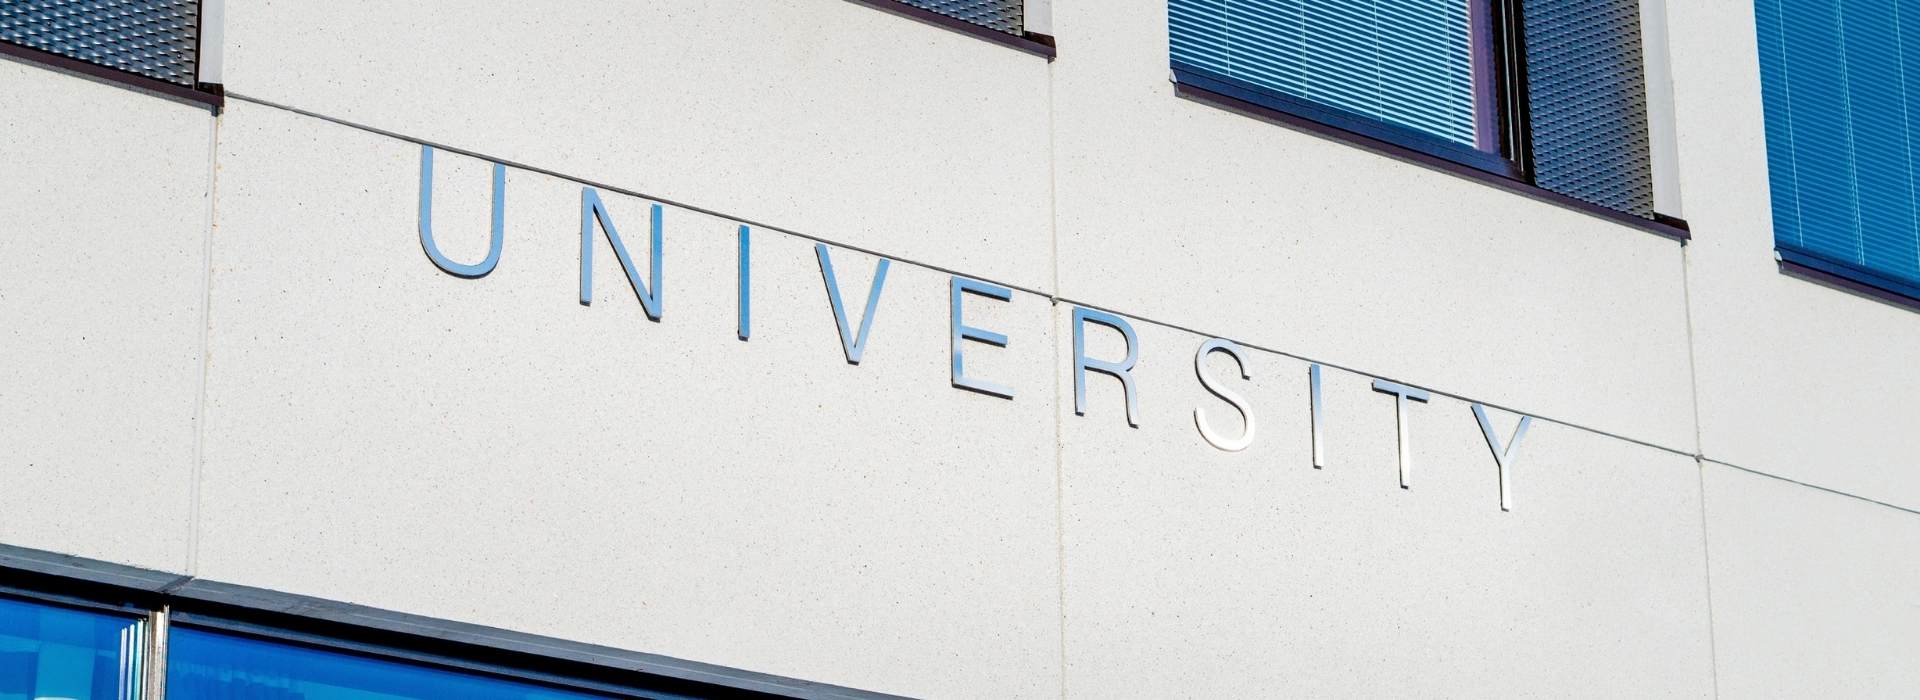 University Sign on Building